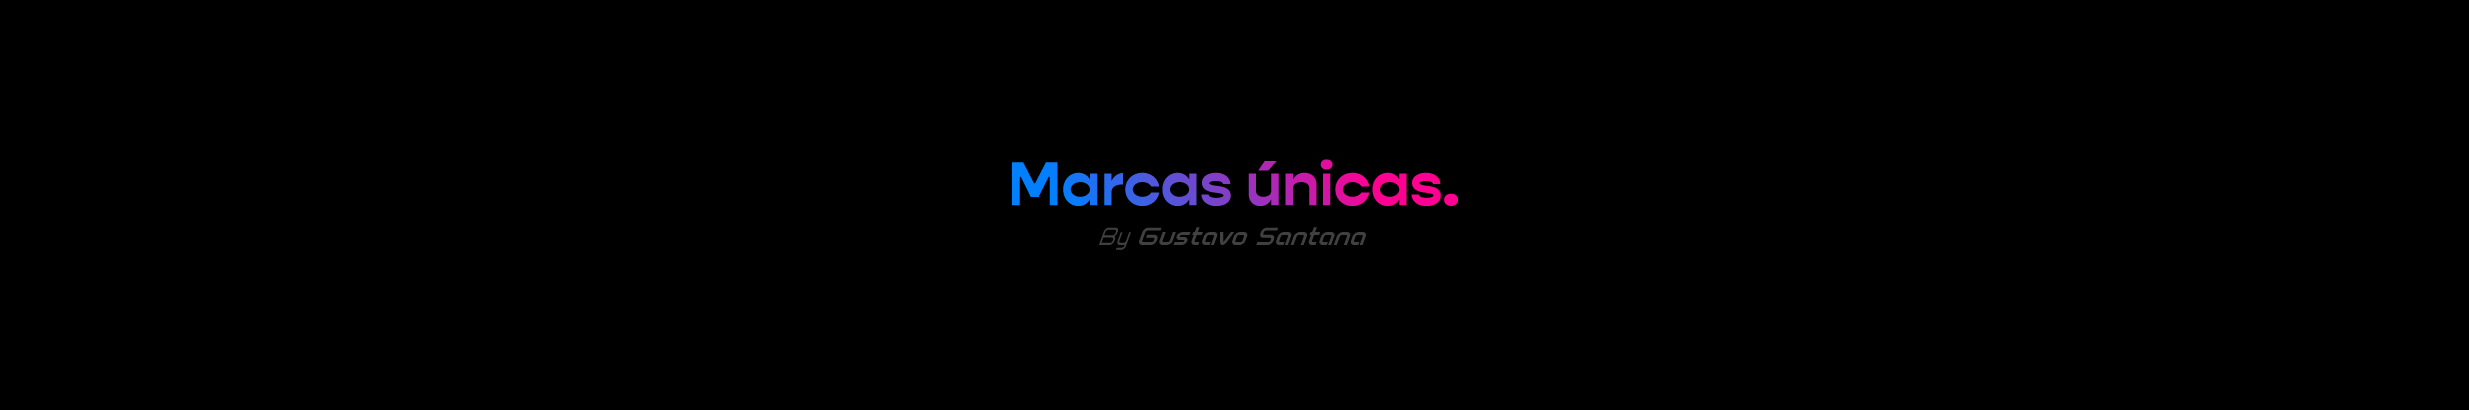 Gustavo Santana's profile banner